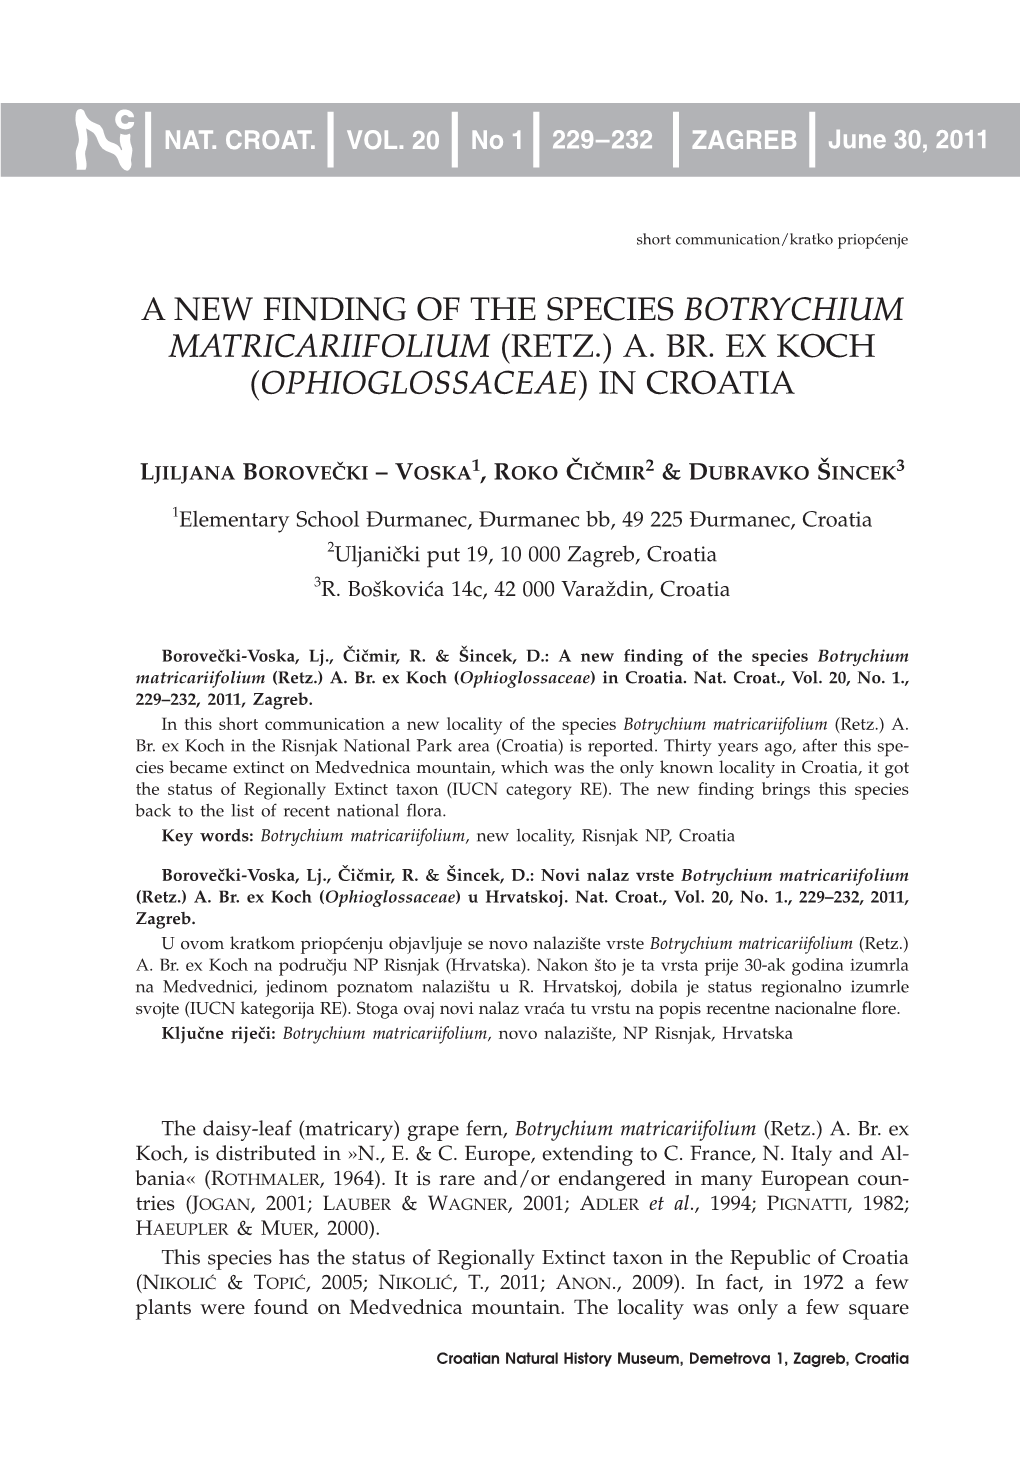 A New Finding of the Species Botrychium Matricariifolium (Retz.) A